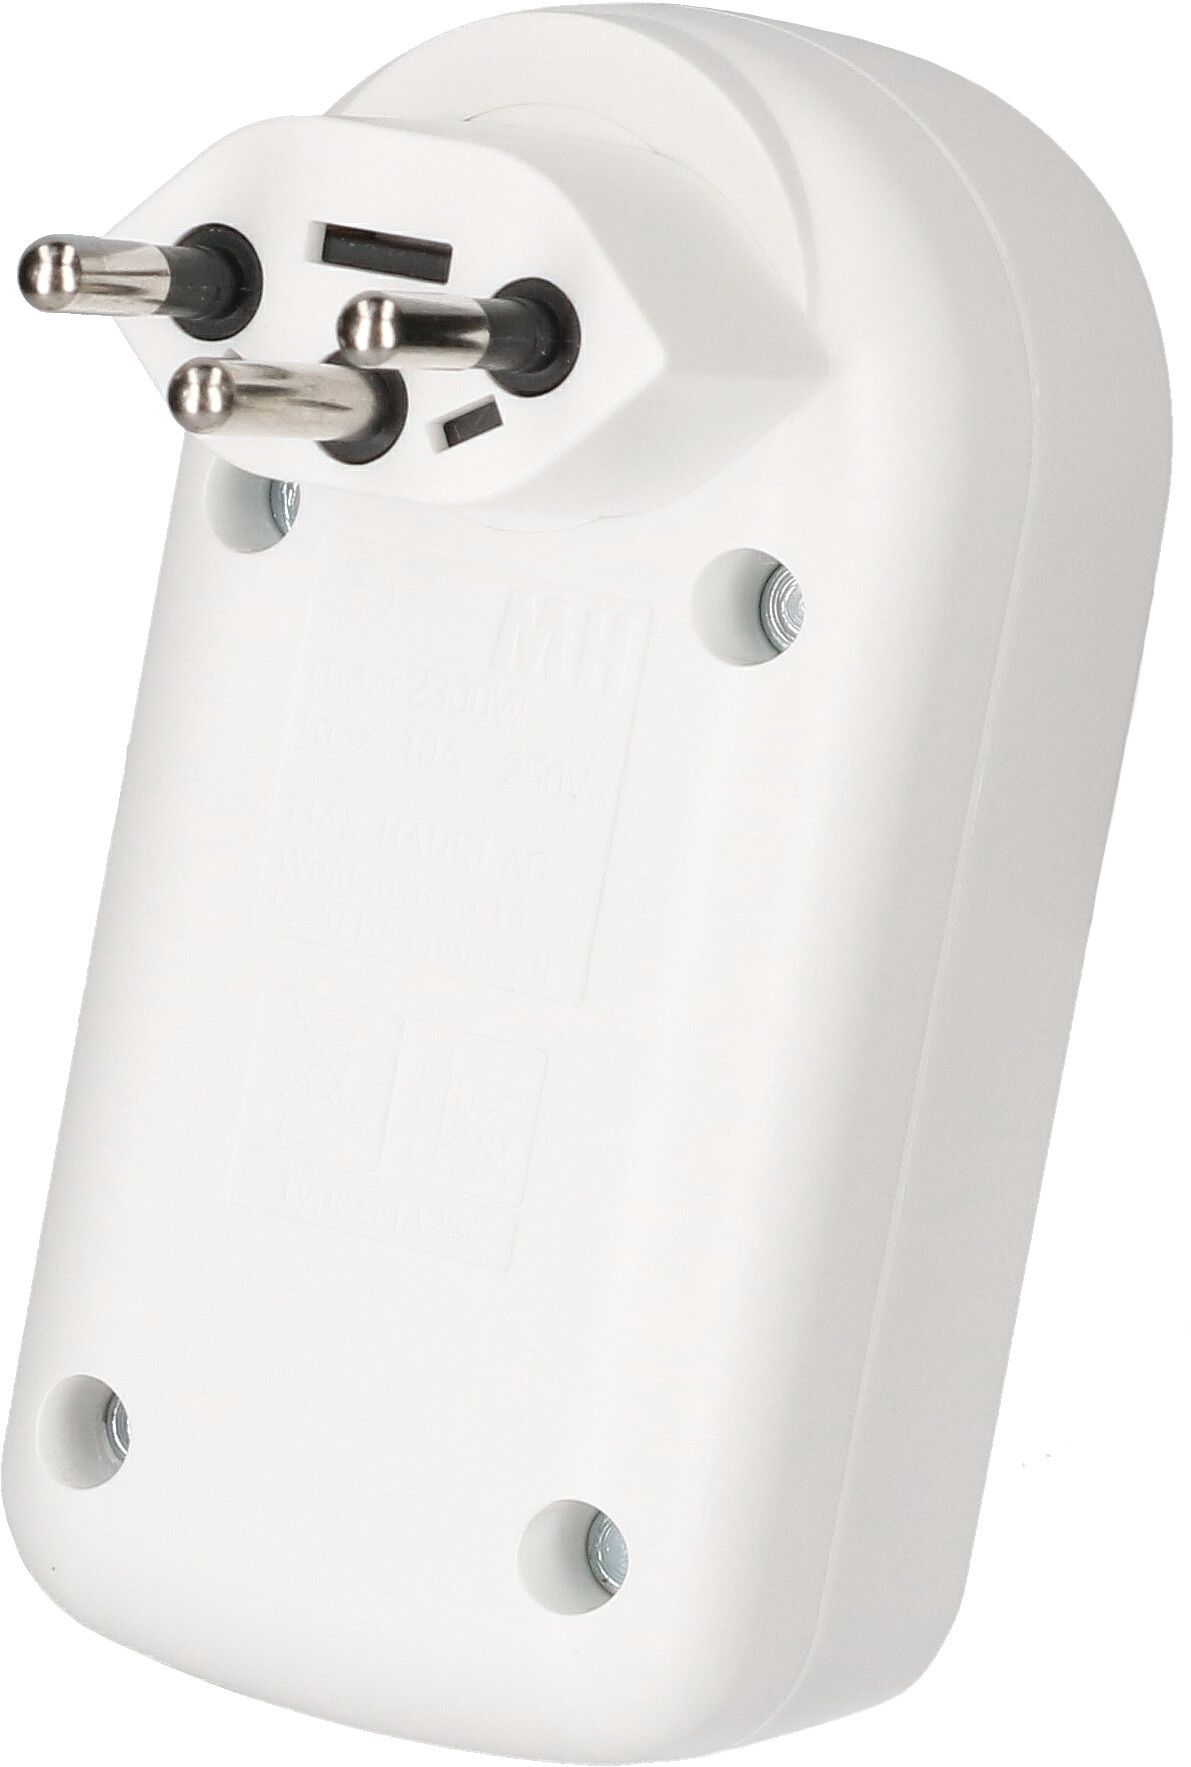 Adaptor 2x type 13 turnable switch white